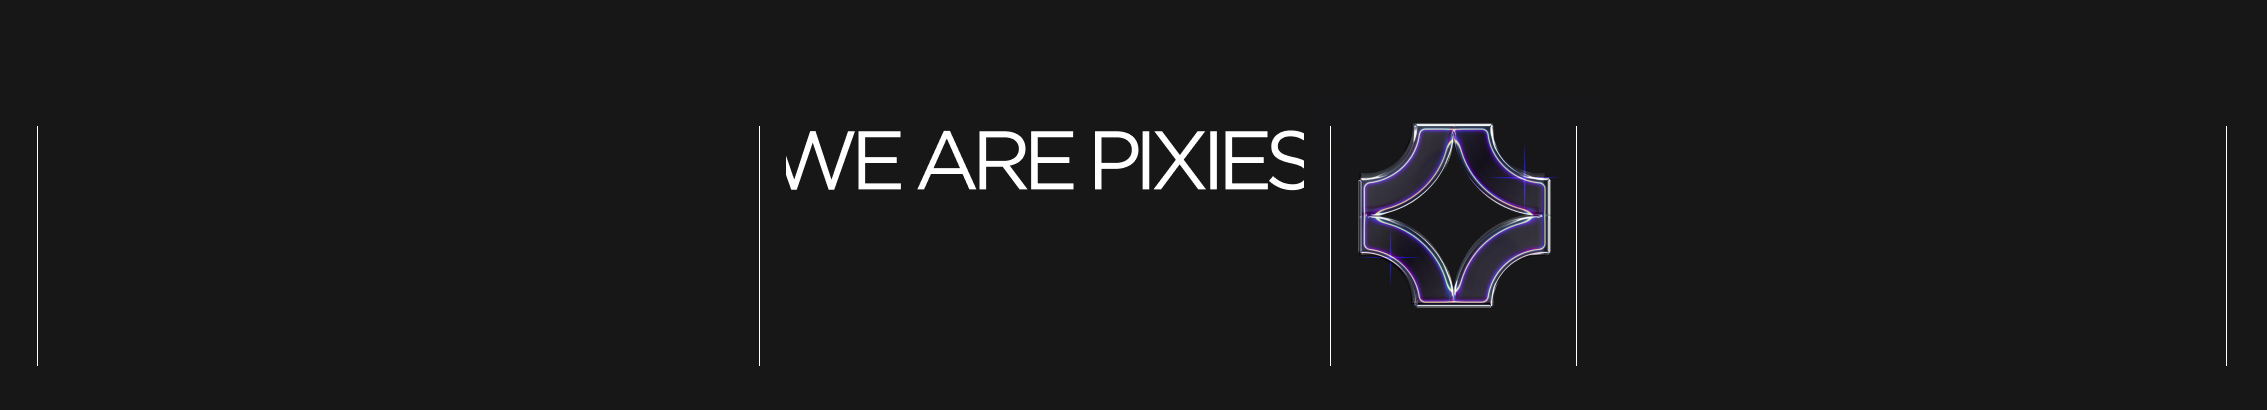 Баннер профиля Pixies studio